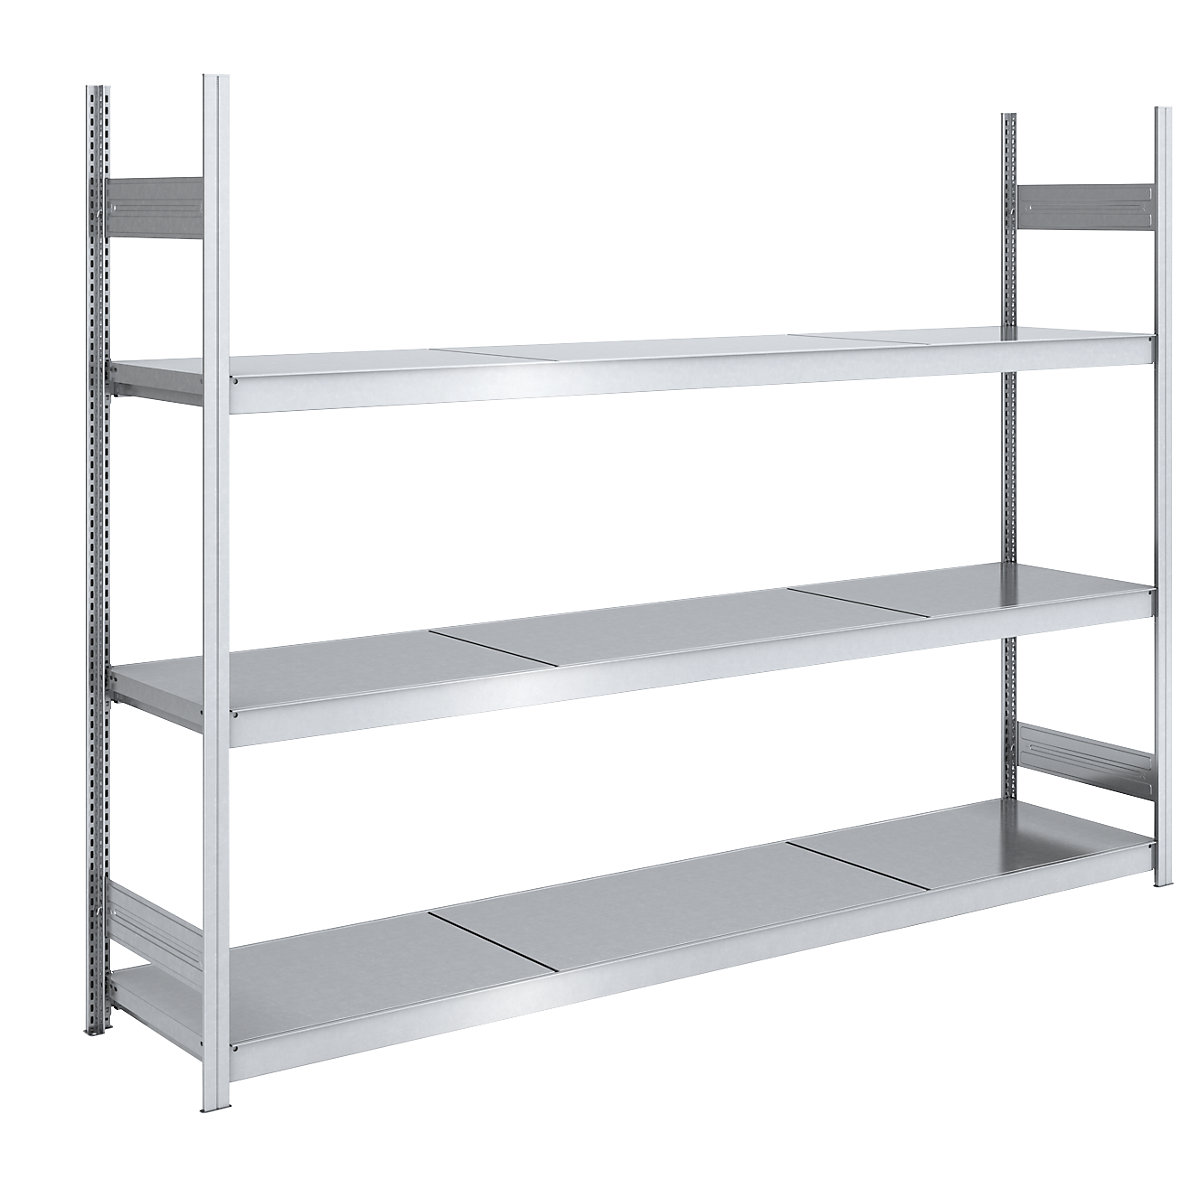 Wide span boltless shelving unit with steel shelves – hofe, height 2000 mm, shelf width 2500 mm, shelf depth 600 mm, standard shelf unit